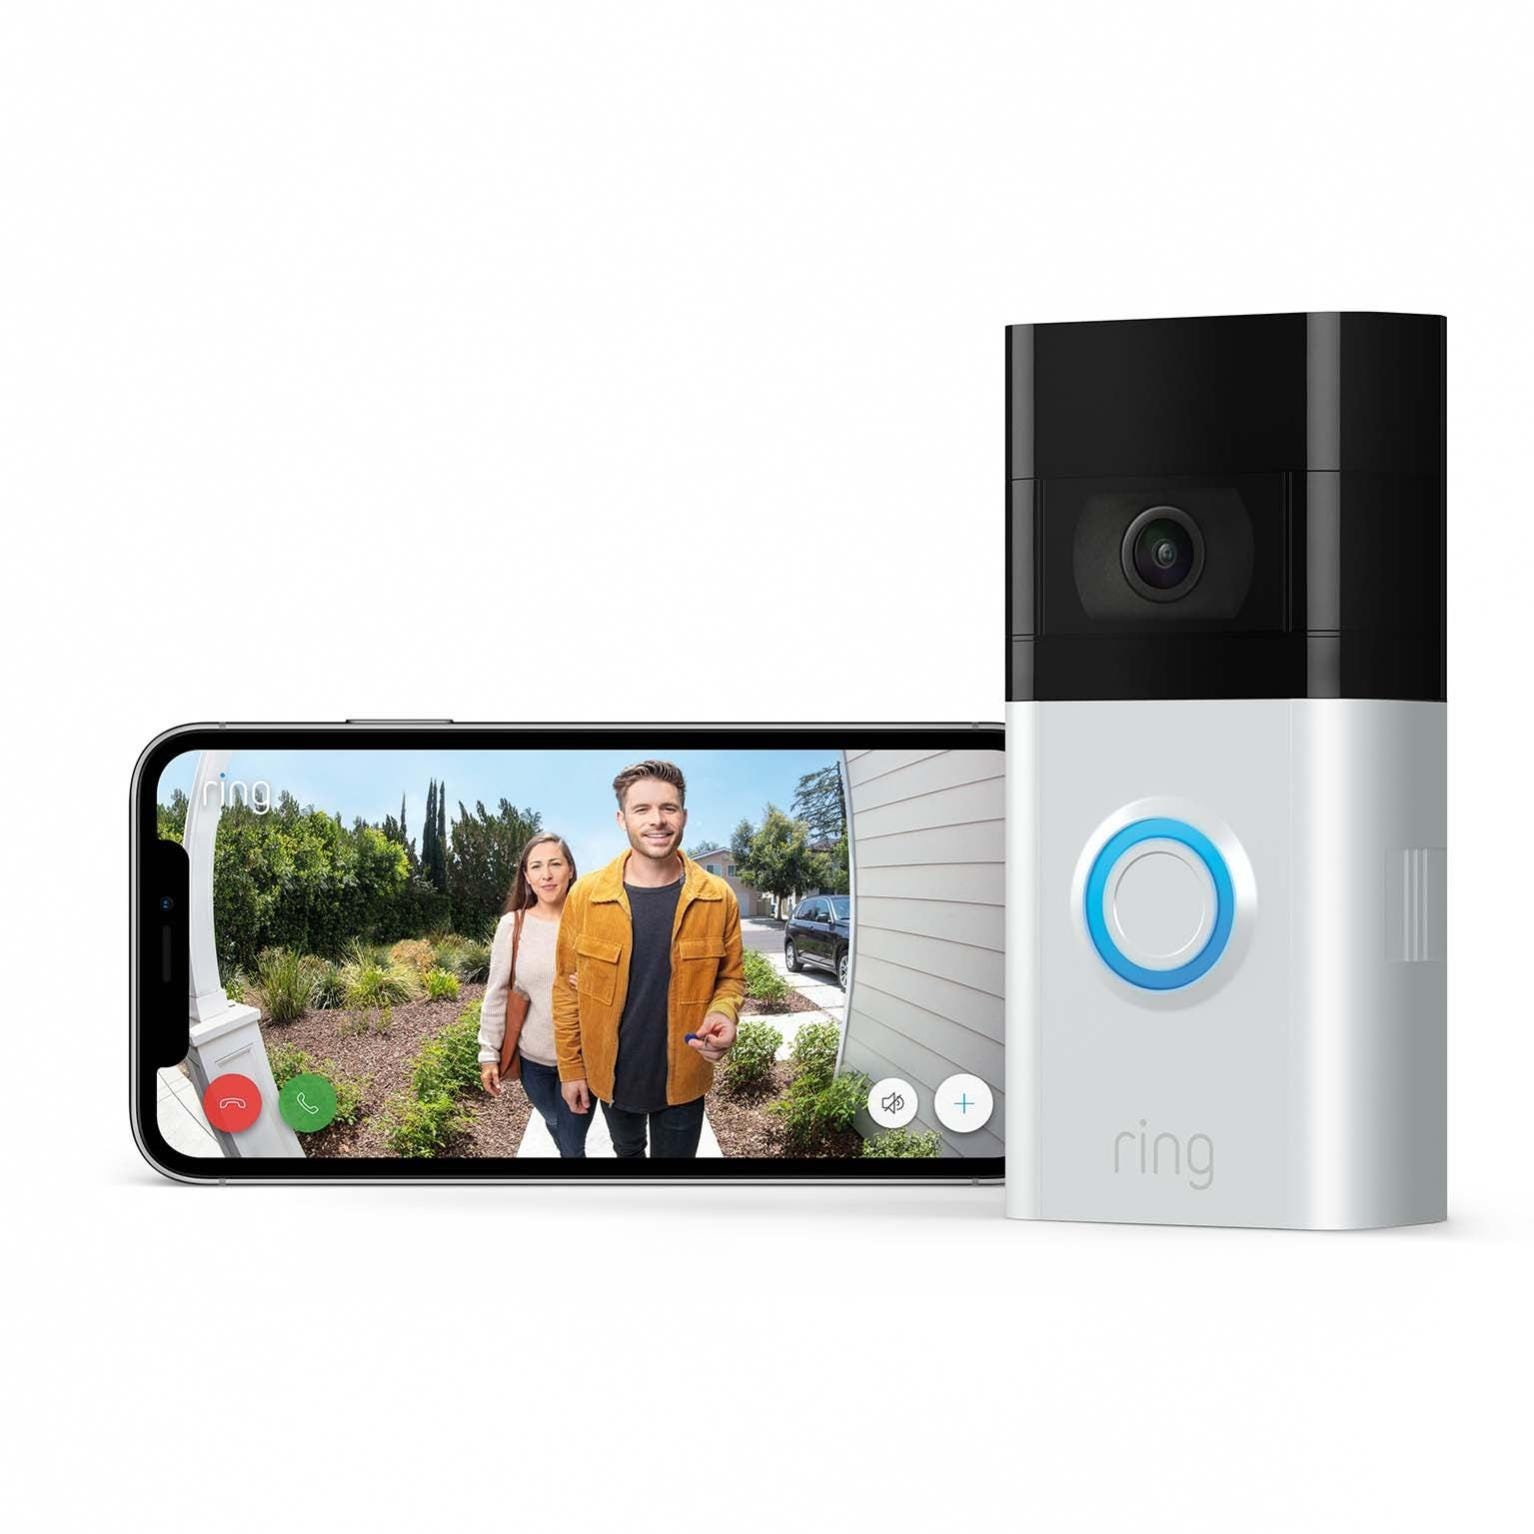 Ring sonnette vidéo sans fil (Video Doorbell) + Chime